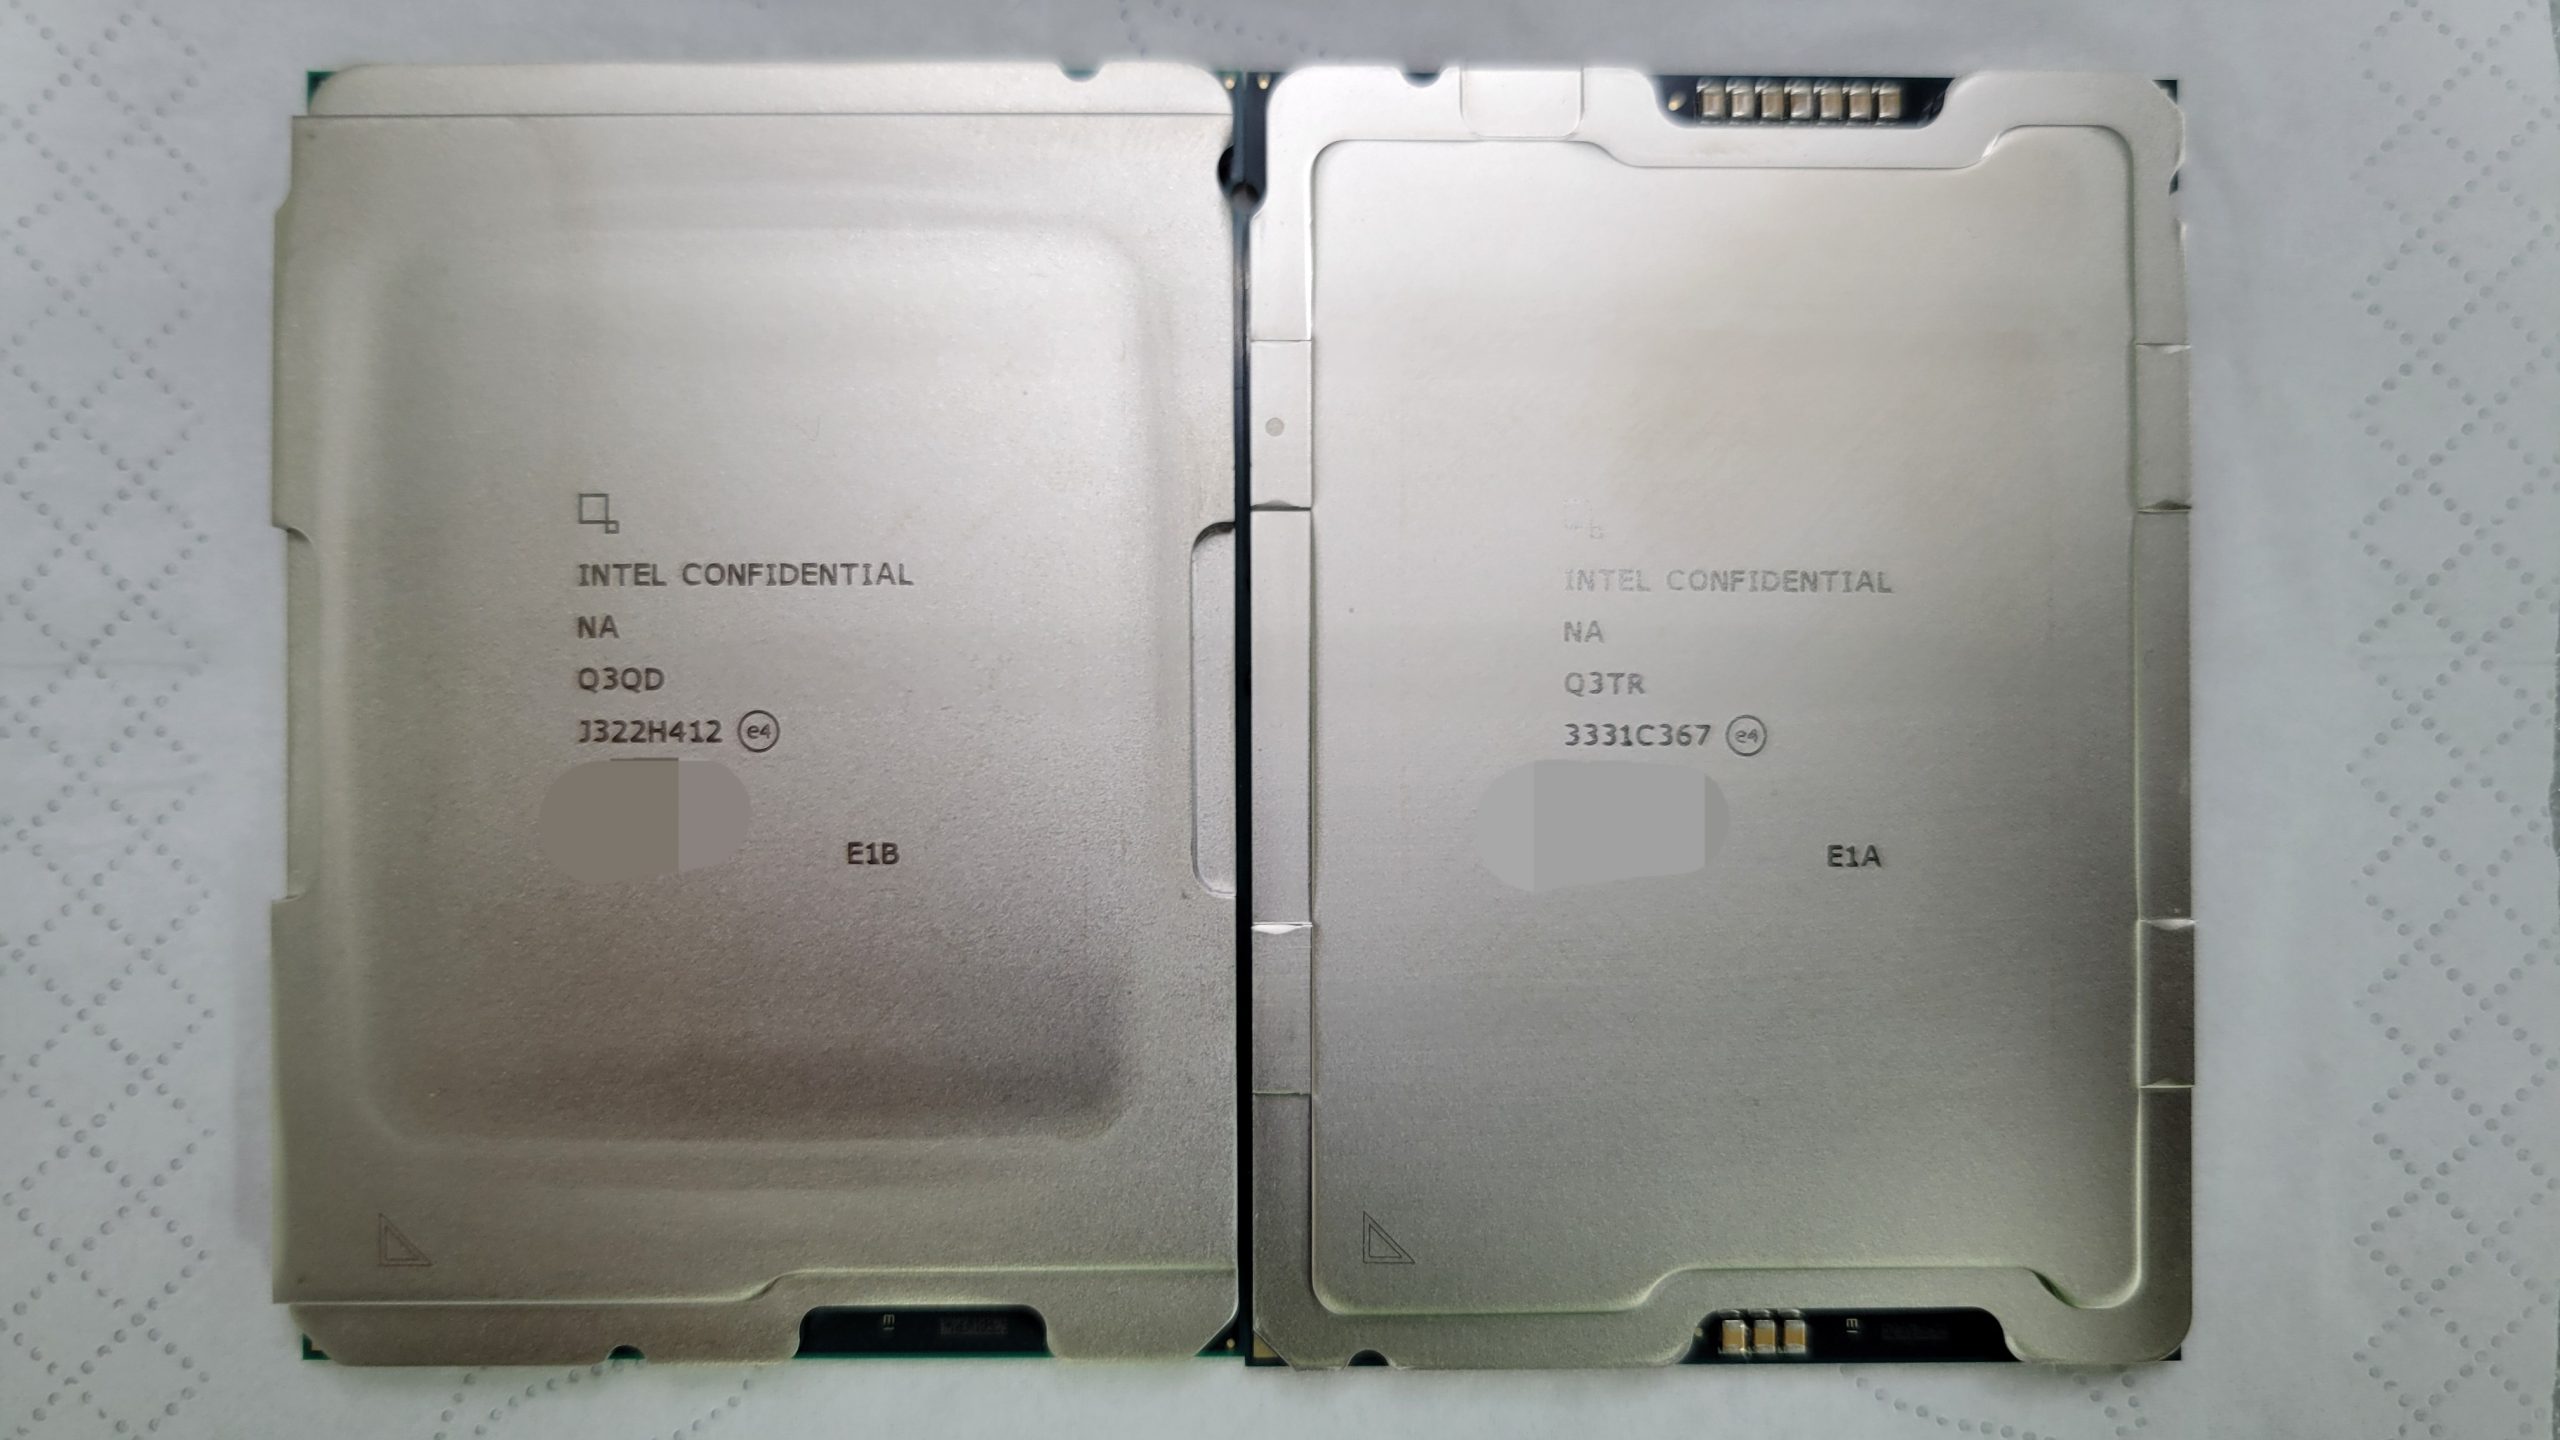 Intel Xeon W9-3575X 44 Core "340W" & Xeon W7-2595X 26 Core "250W" CPUs Benchmarked, First Tests of Sapphire Rapids Refresh 2